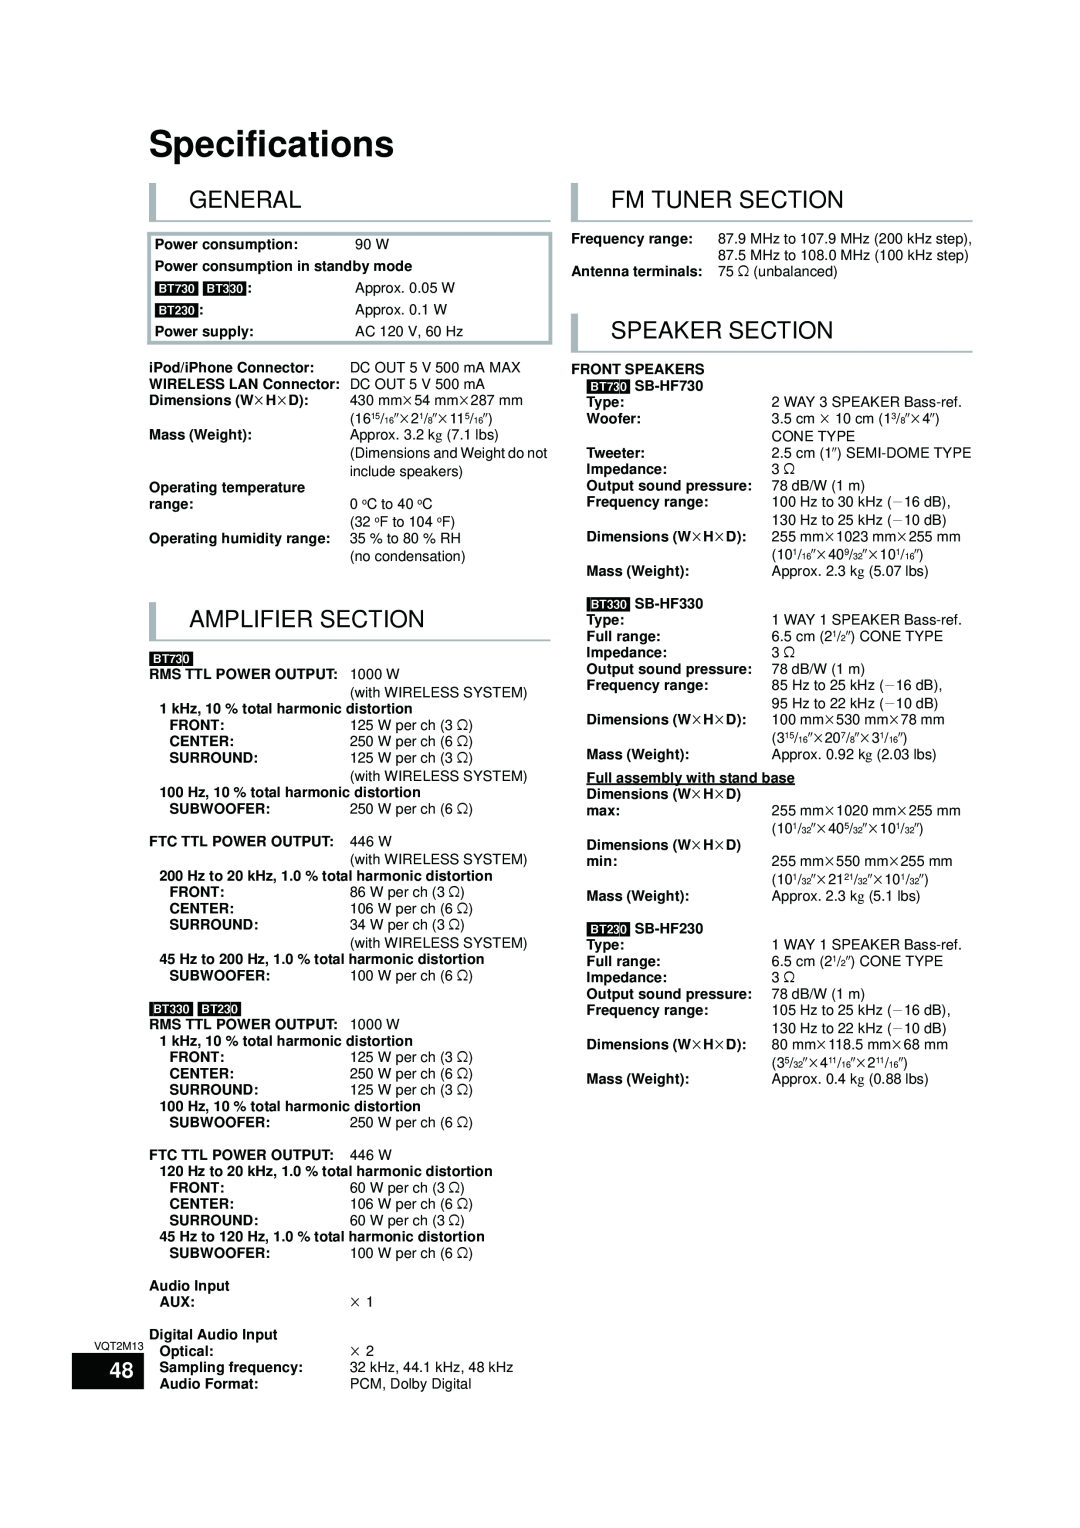 Panasonic SC-BT730, SC-BT330 Specifications, General, Amplifier Section, Fm Tuner Section, Speaker Section 